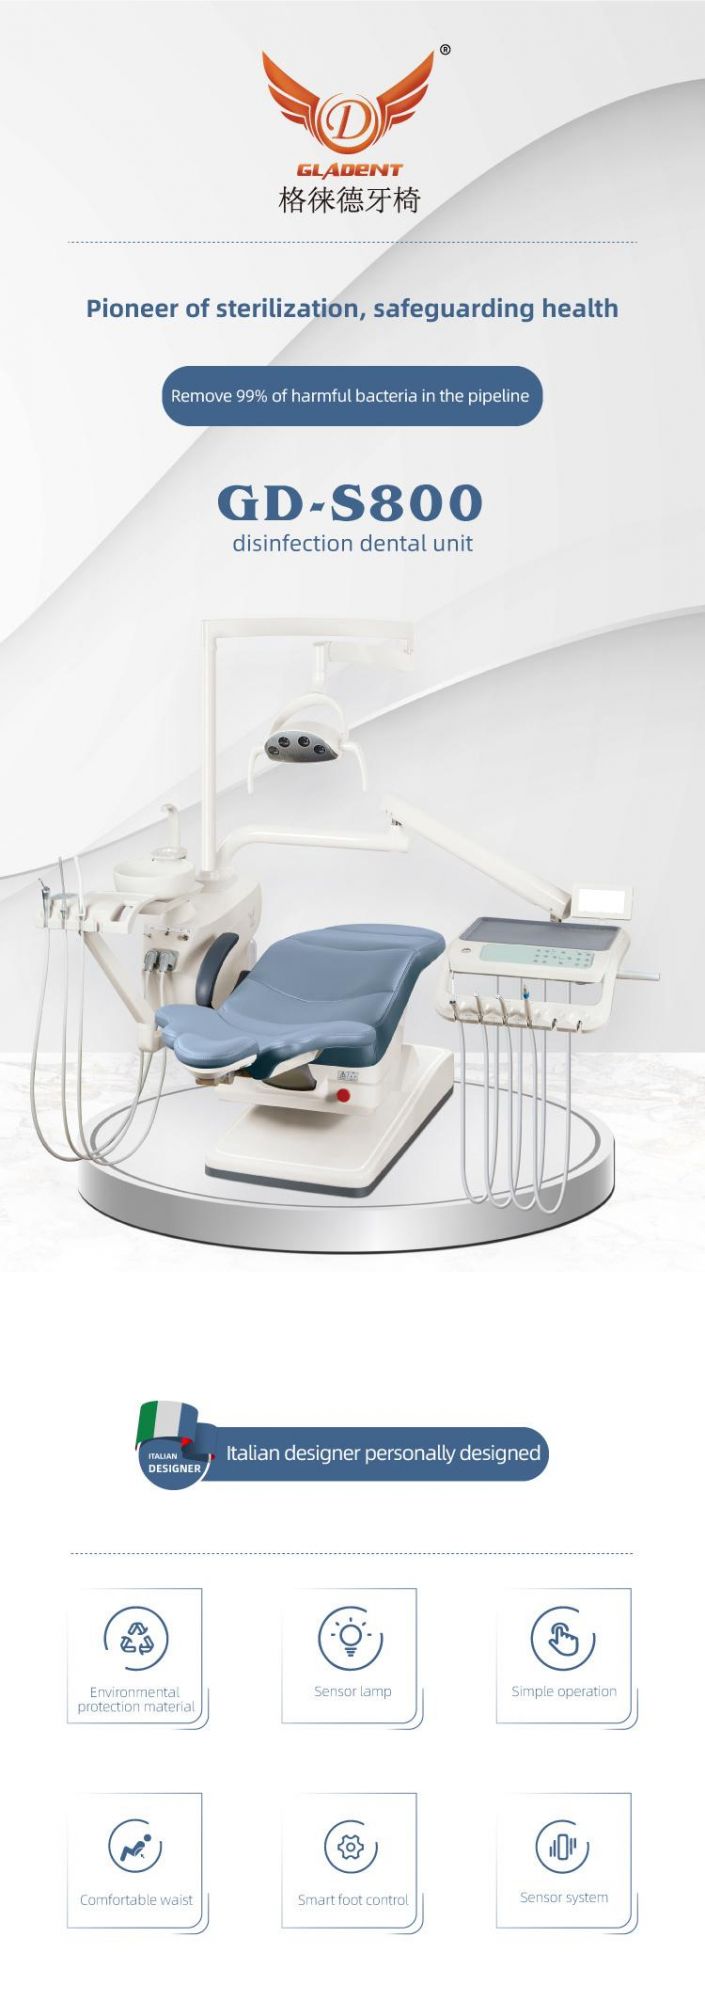 Integral Dental Chair Unit, Portable Dental Unit Price with Mobile Cart, Dental Equipments Manufacturer, Dental Laboratory, Dental Instruments, Dental Supply